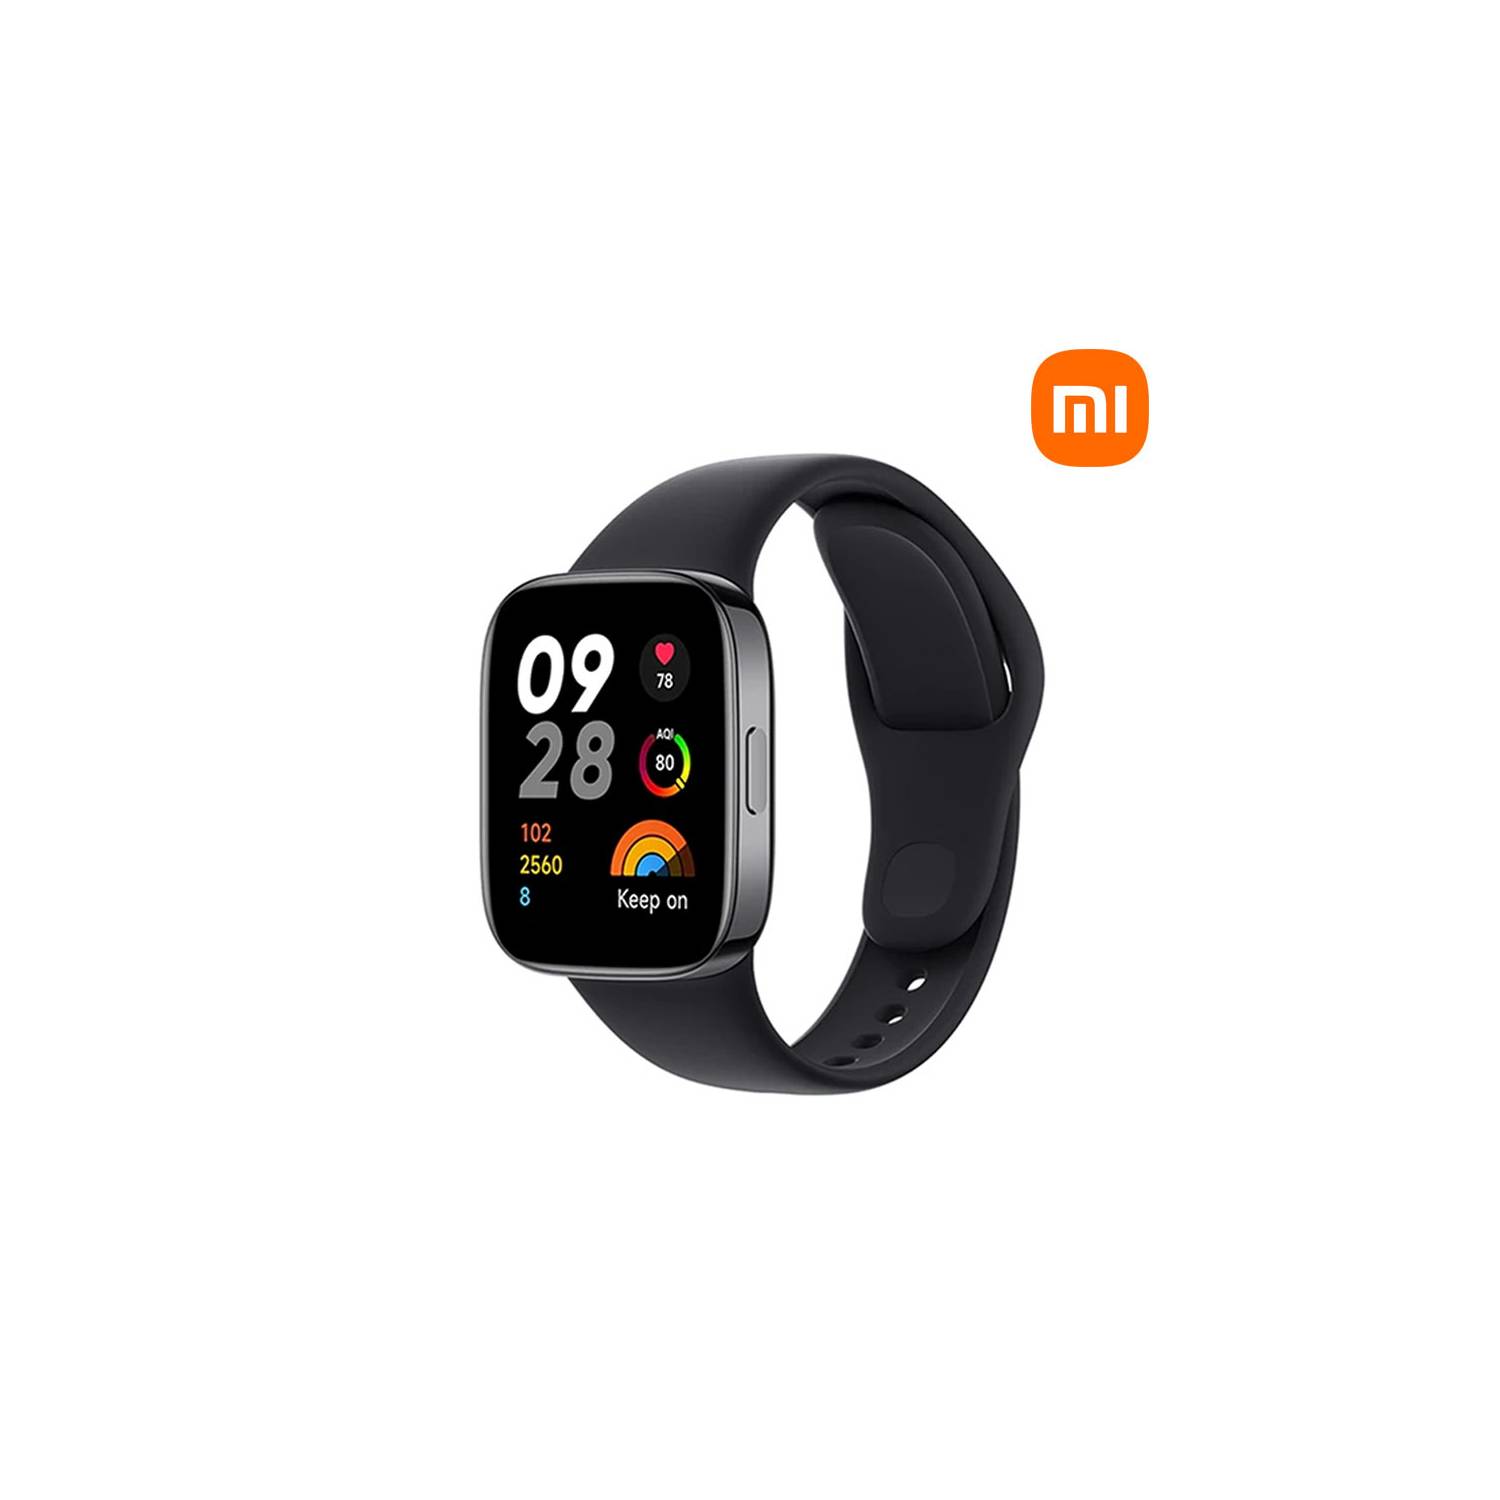 Smartwatch Lige WH8 reloj inteligente + Audifonos Redmi Airdots 2